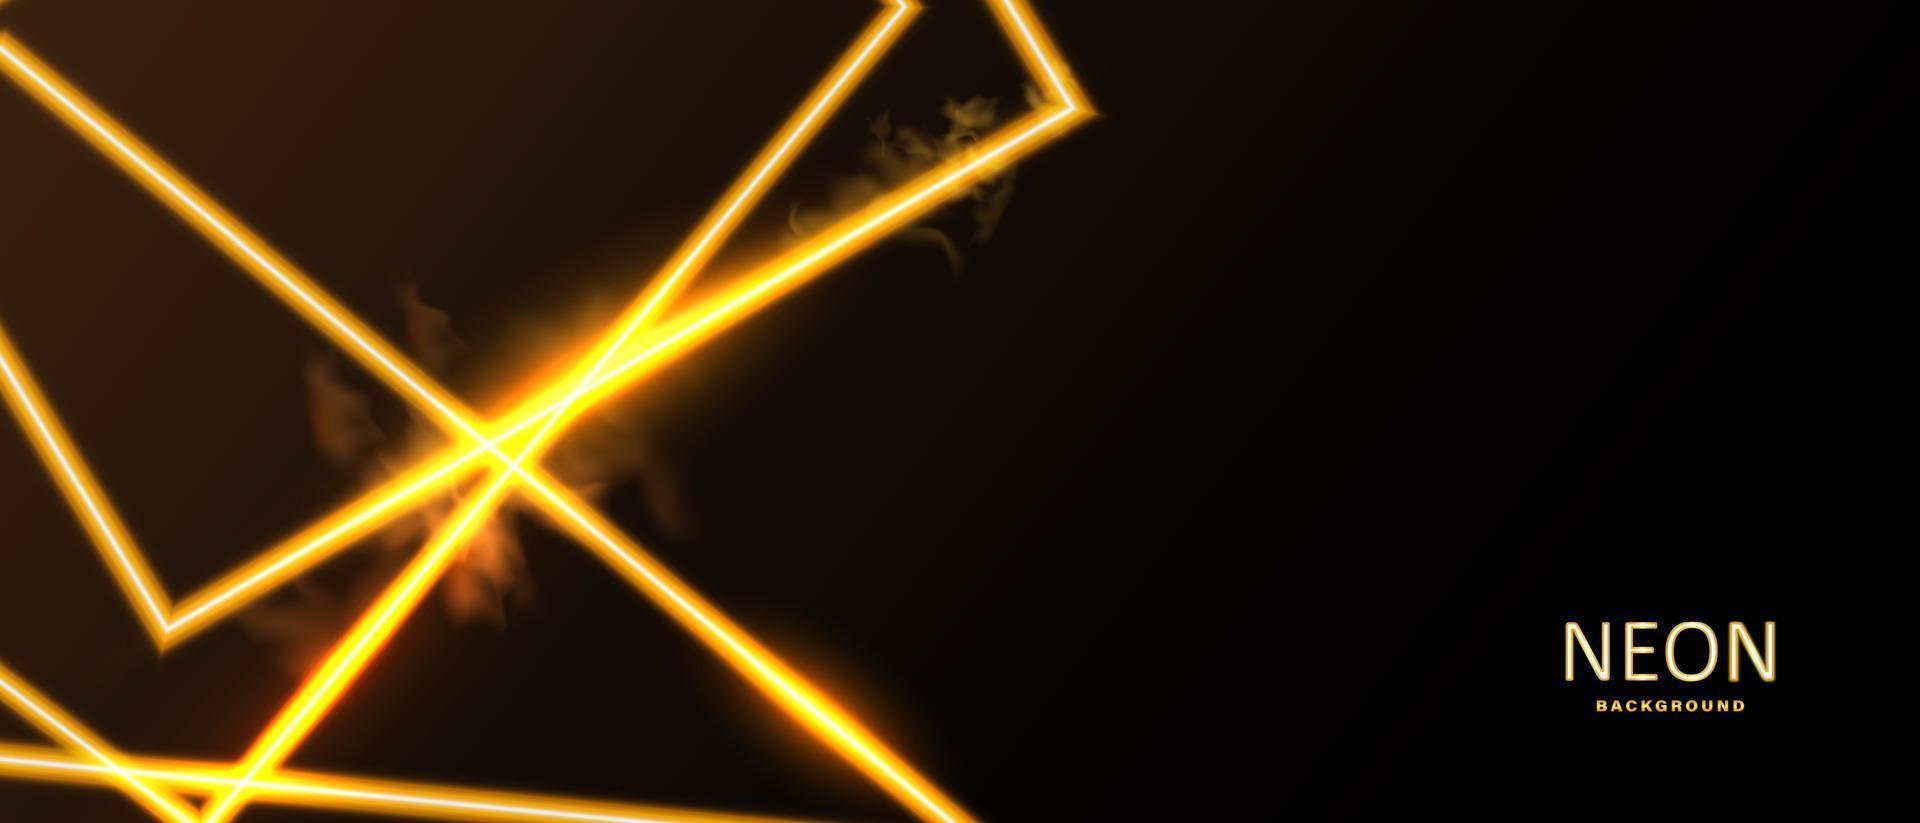 Golden geometric neon light effect background. vector